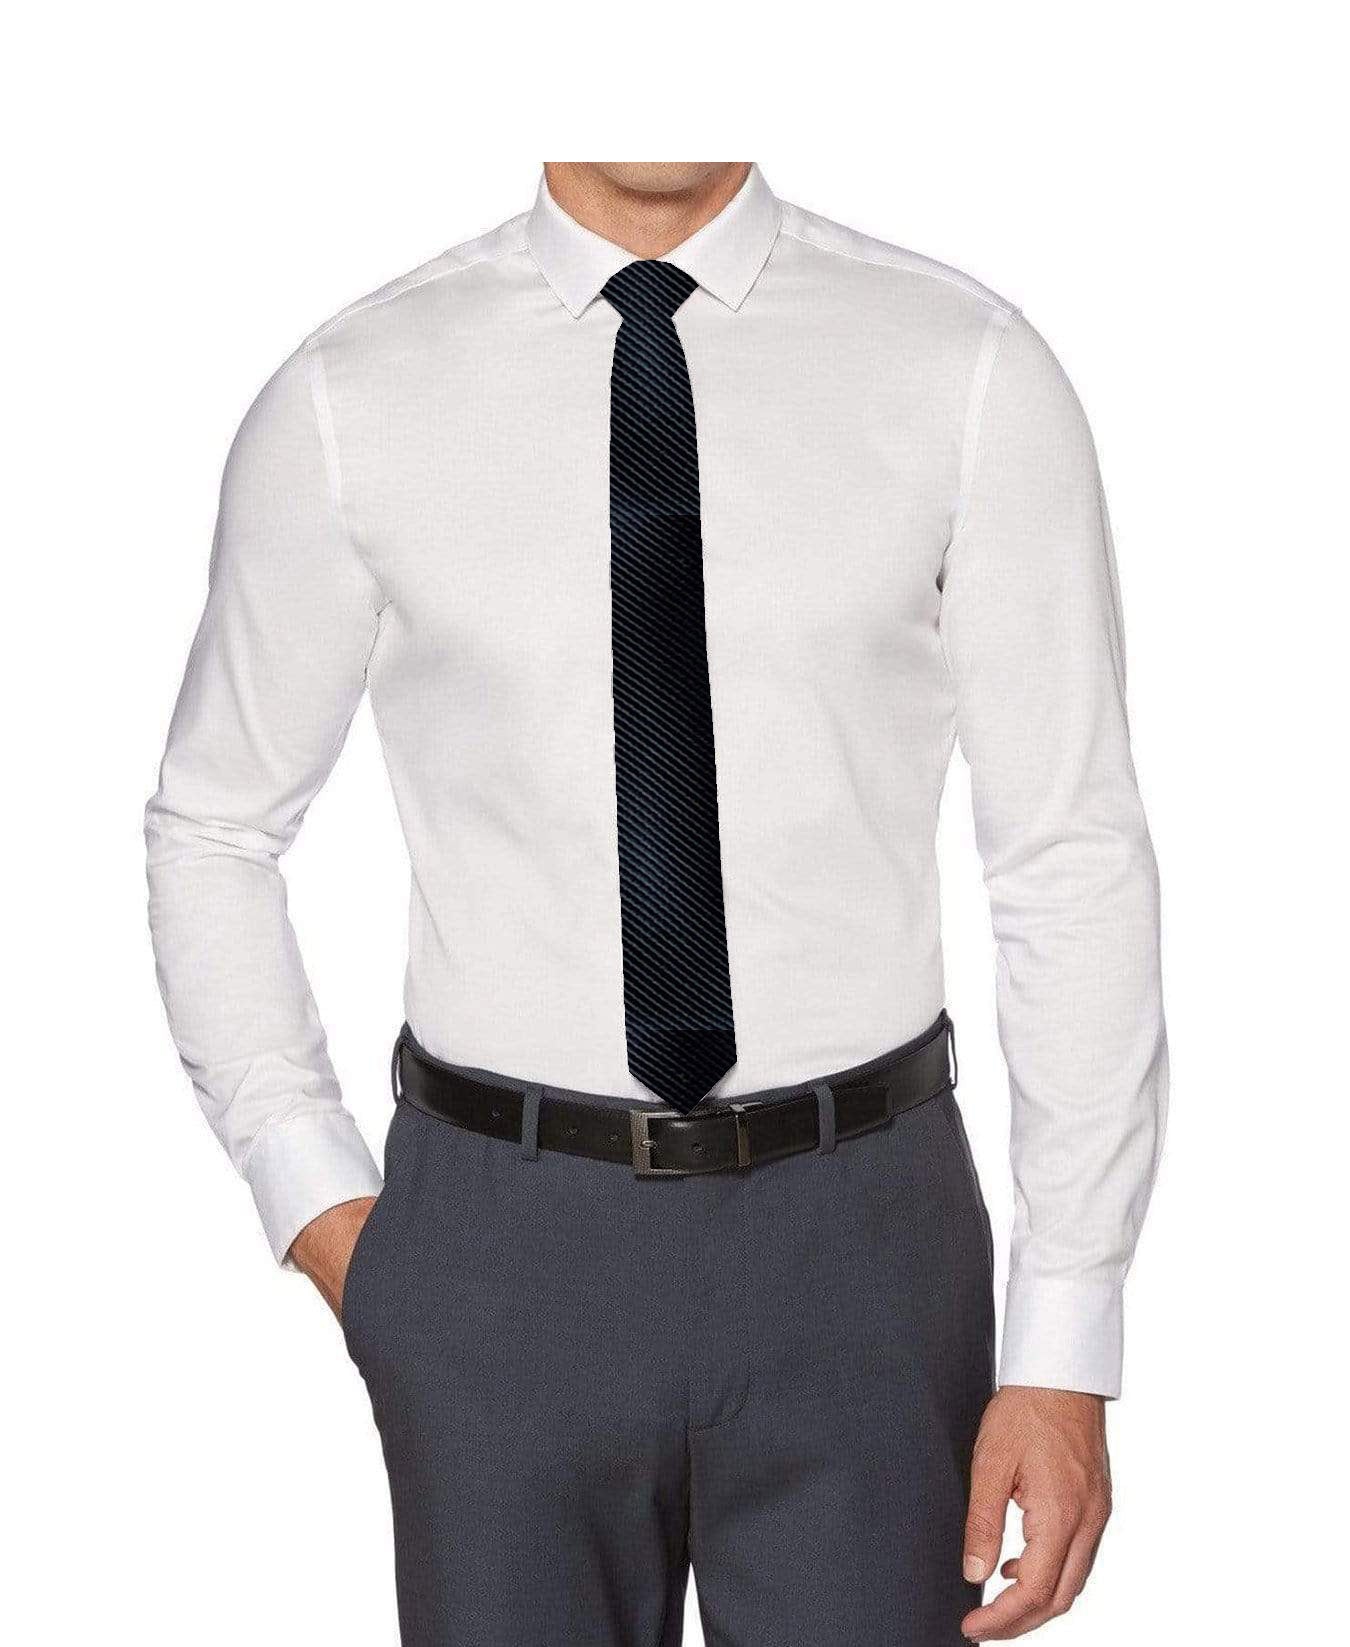 Perry Ellis Boys Dress Shirts w Dk Grey Tie Solid Shirts w Colored Tie